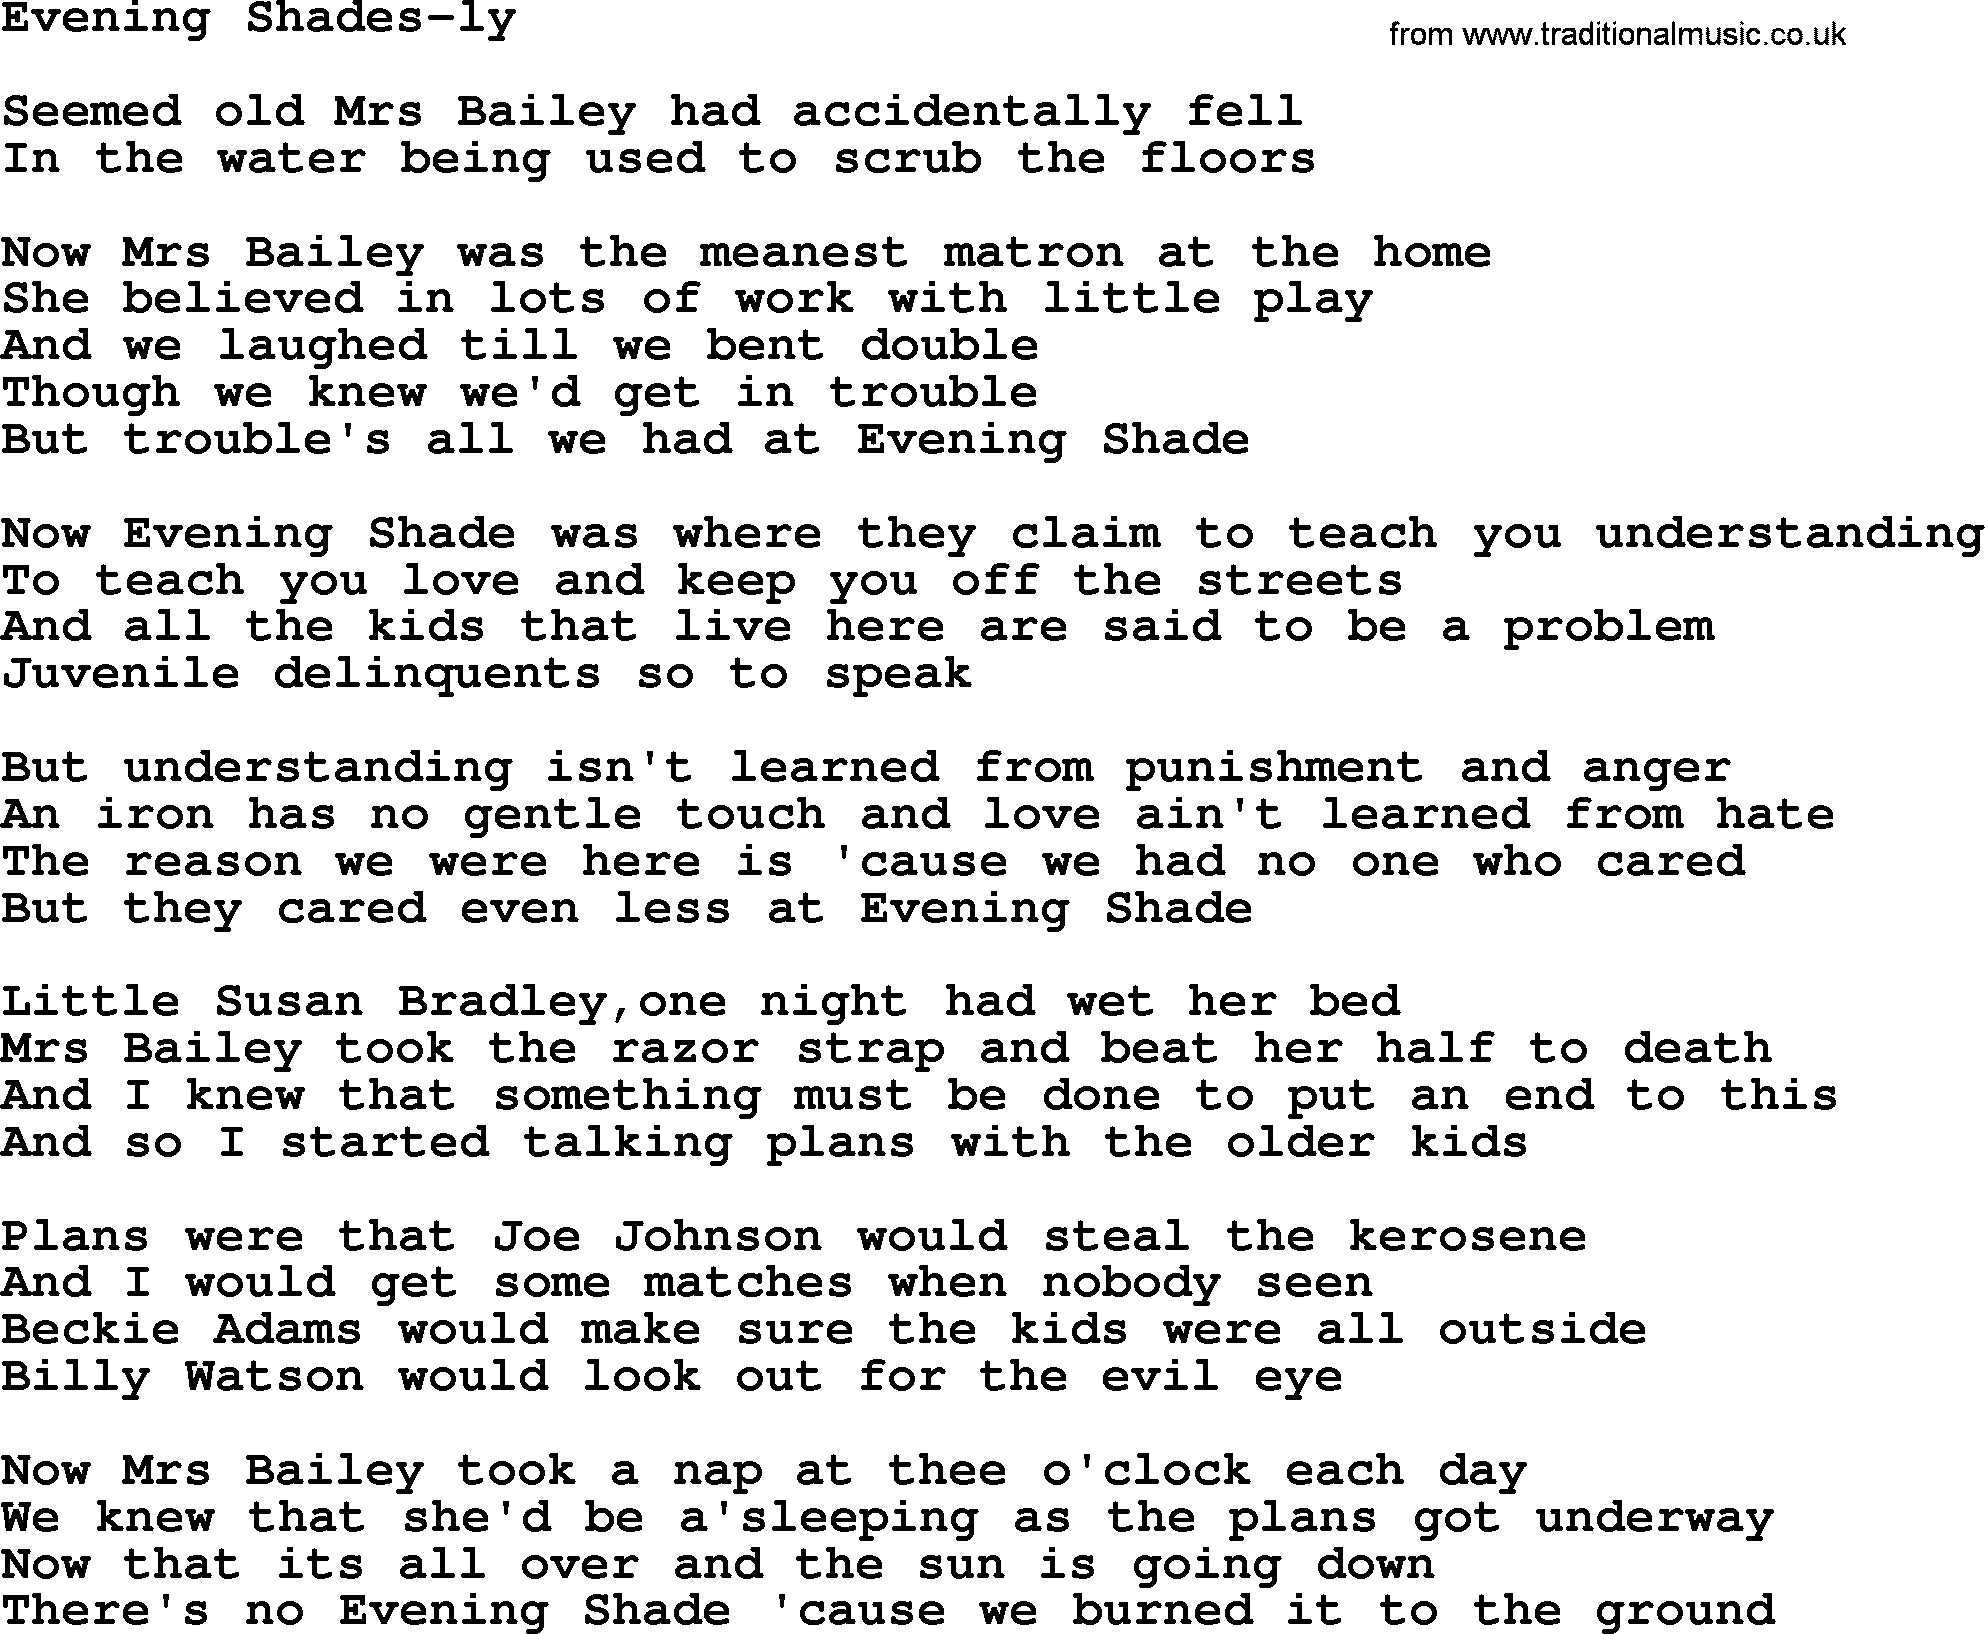 Dolly Parton song Evening Shades-ly.txt lyrics